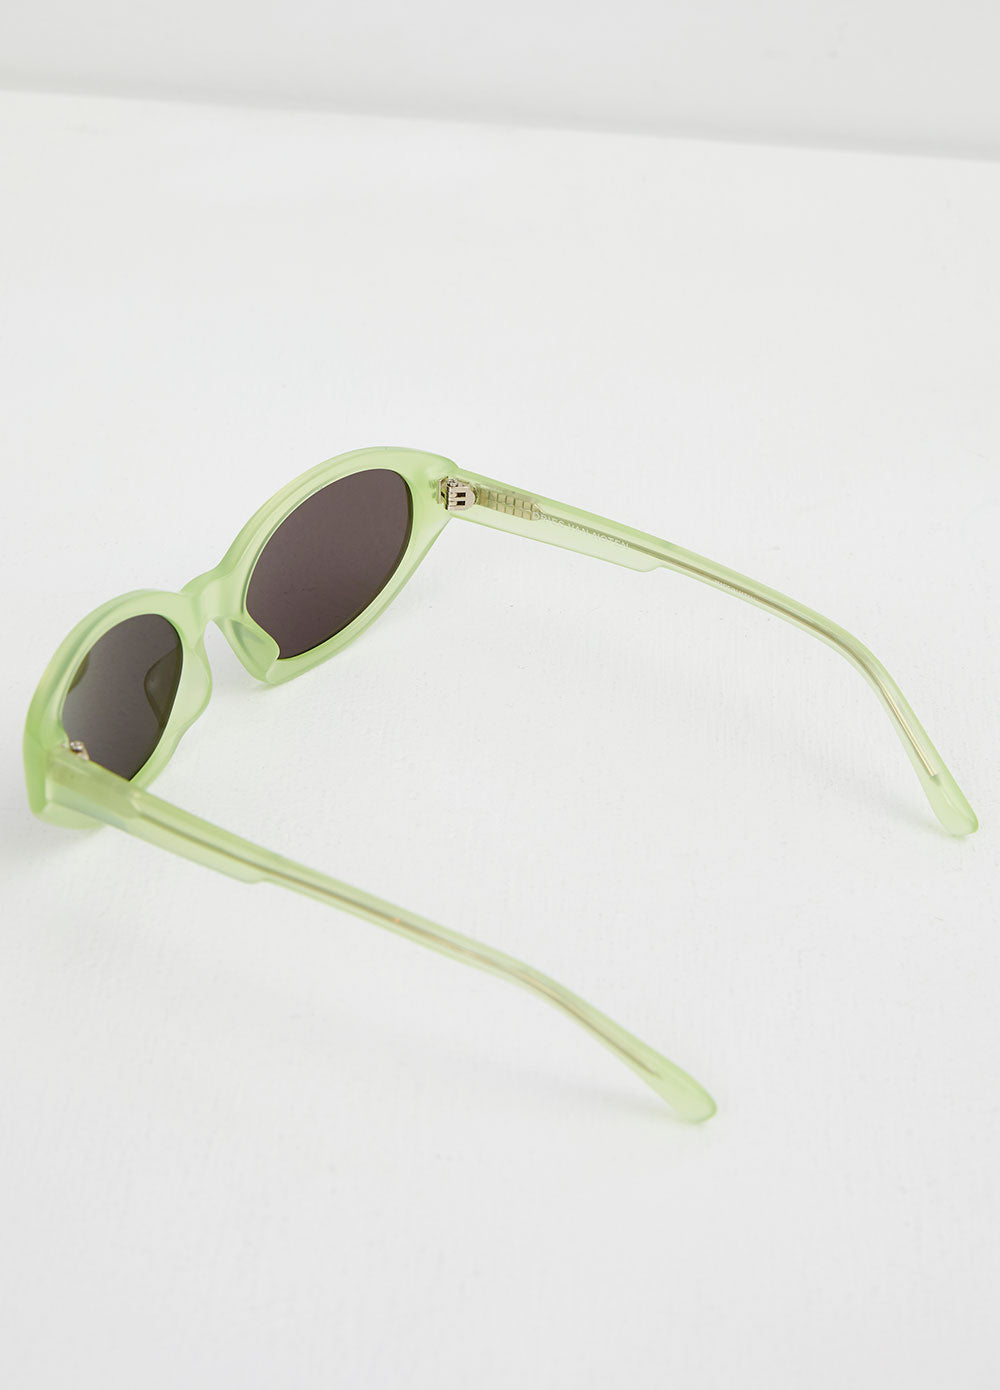 x Linda Farrow Oval Sunglasses